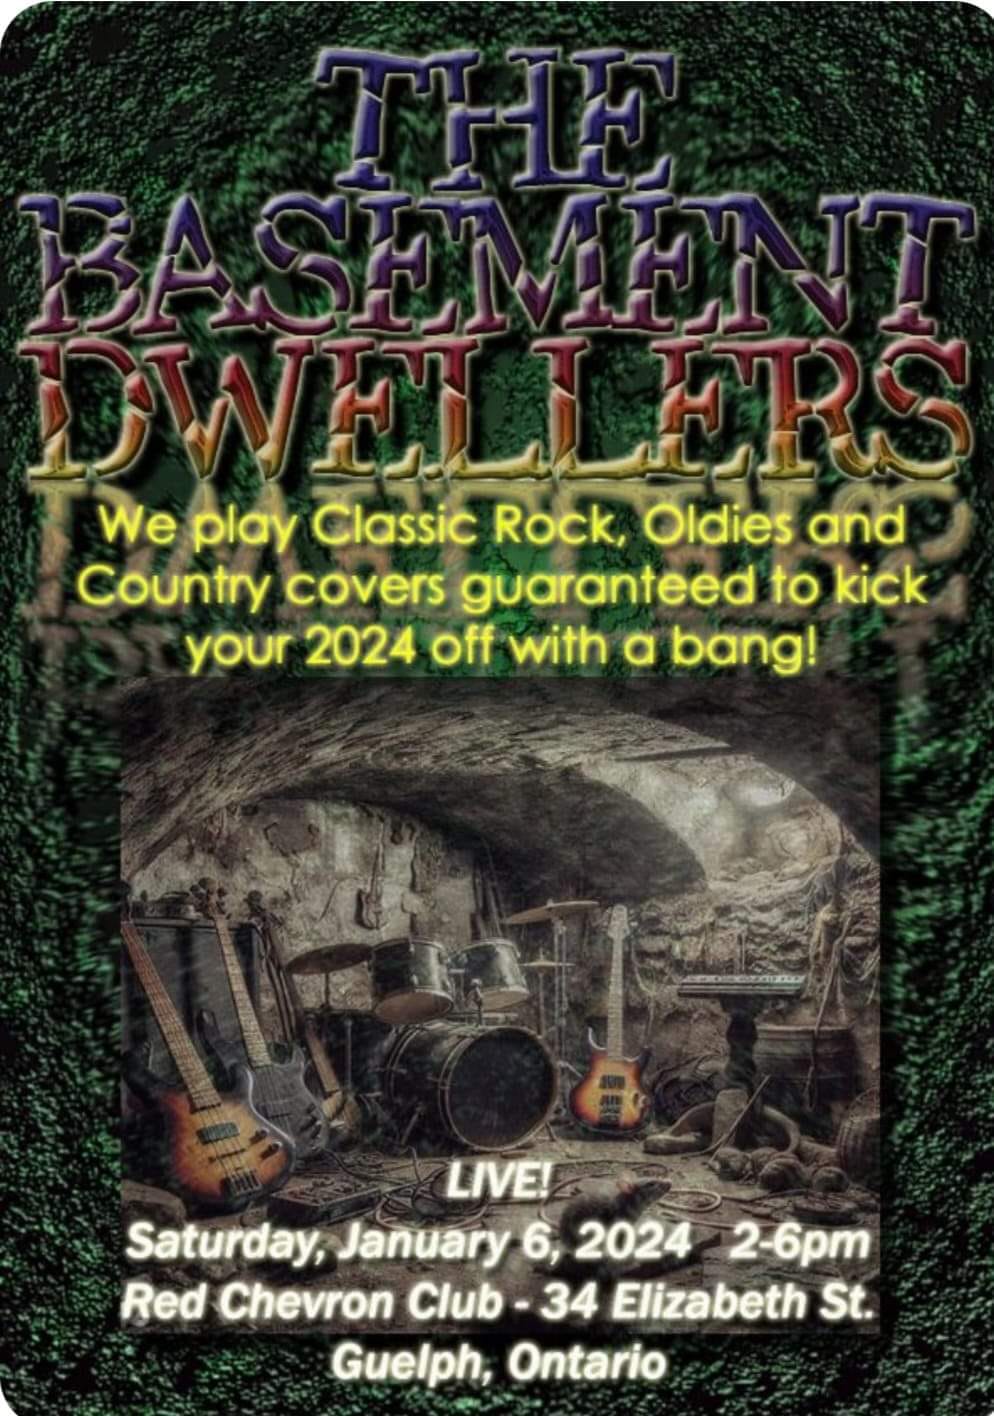 The Basement Dwellers